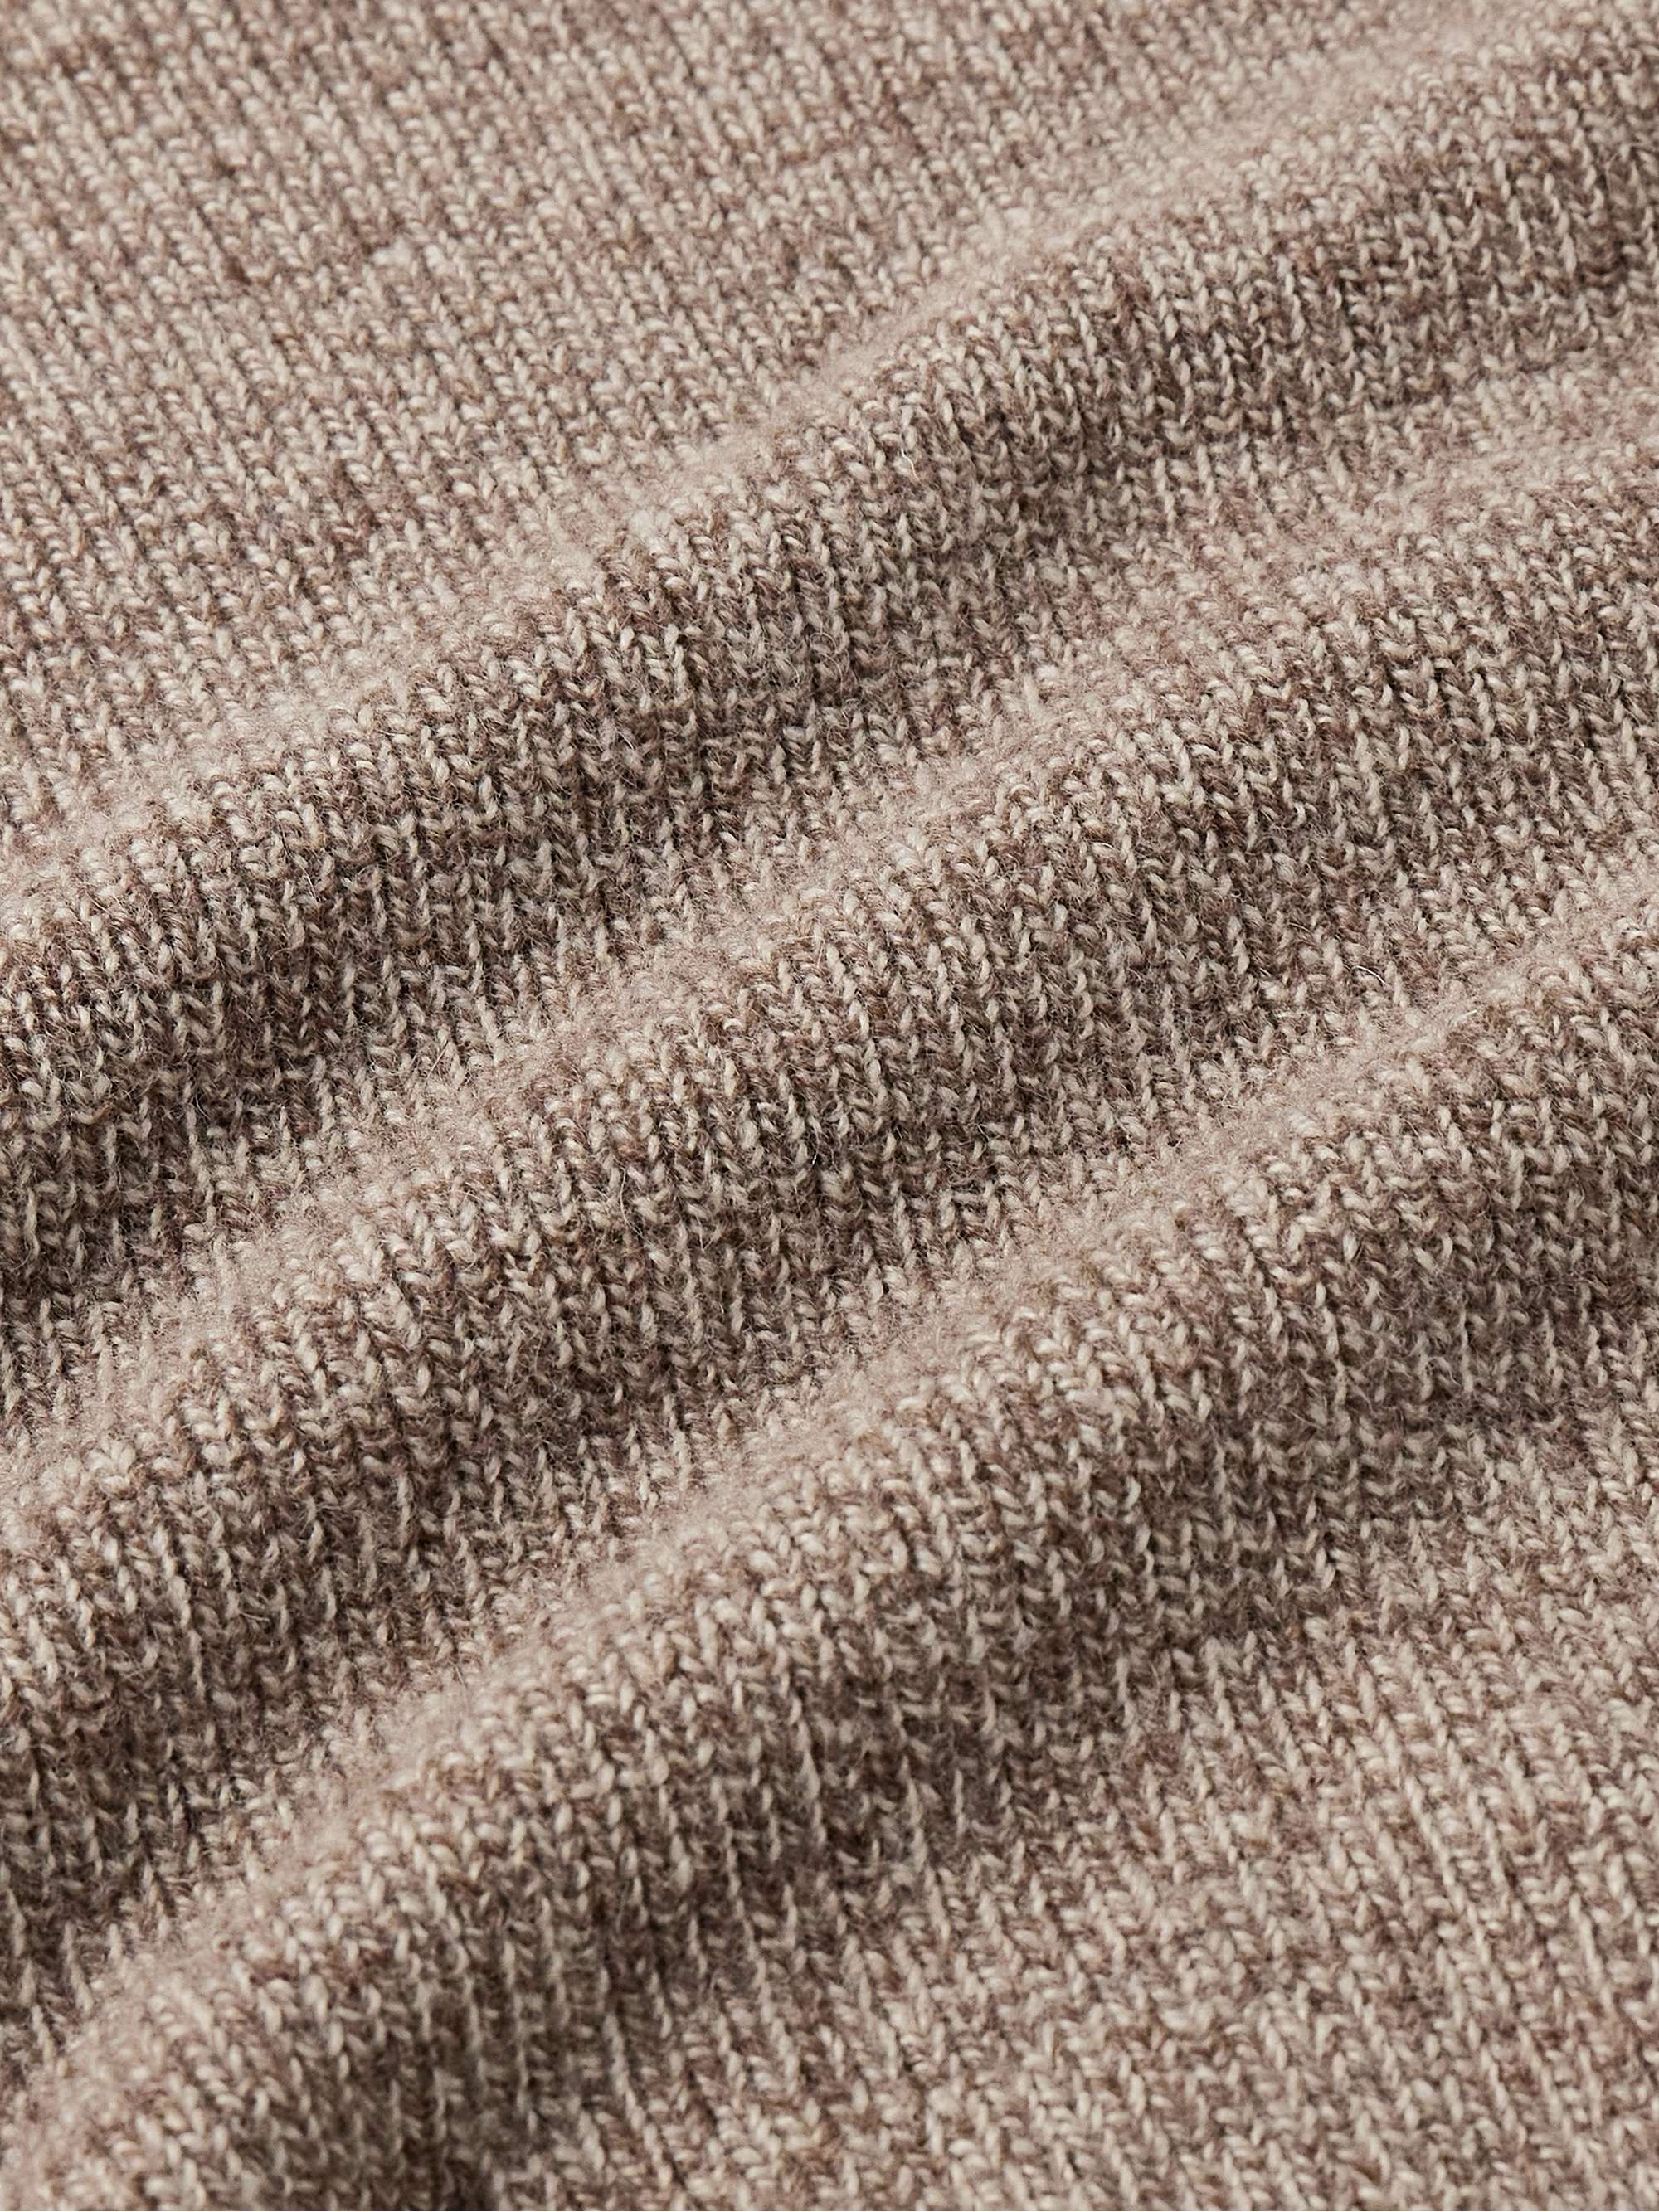 SUNSPEL Ribbed Wool Sweater